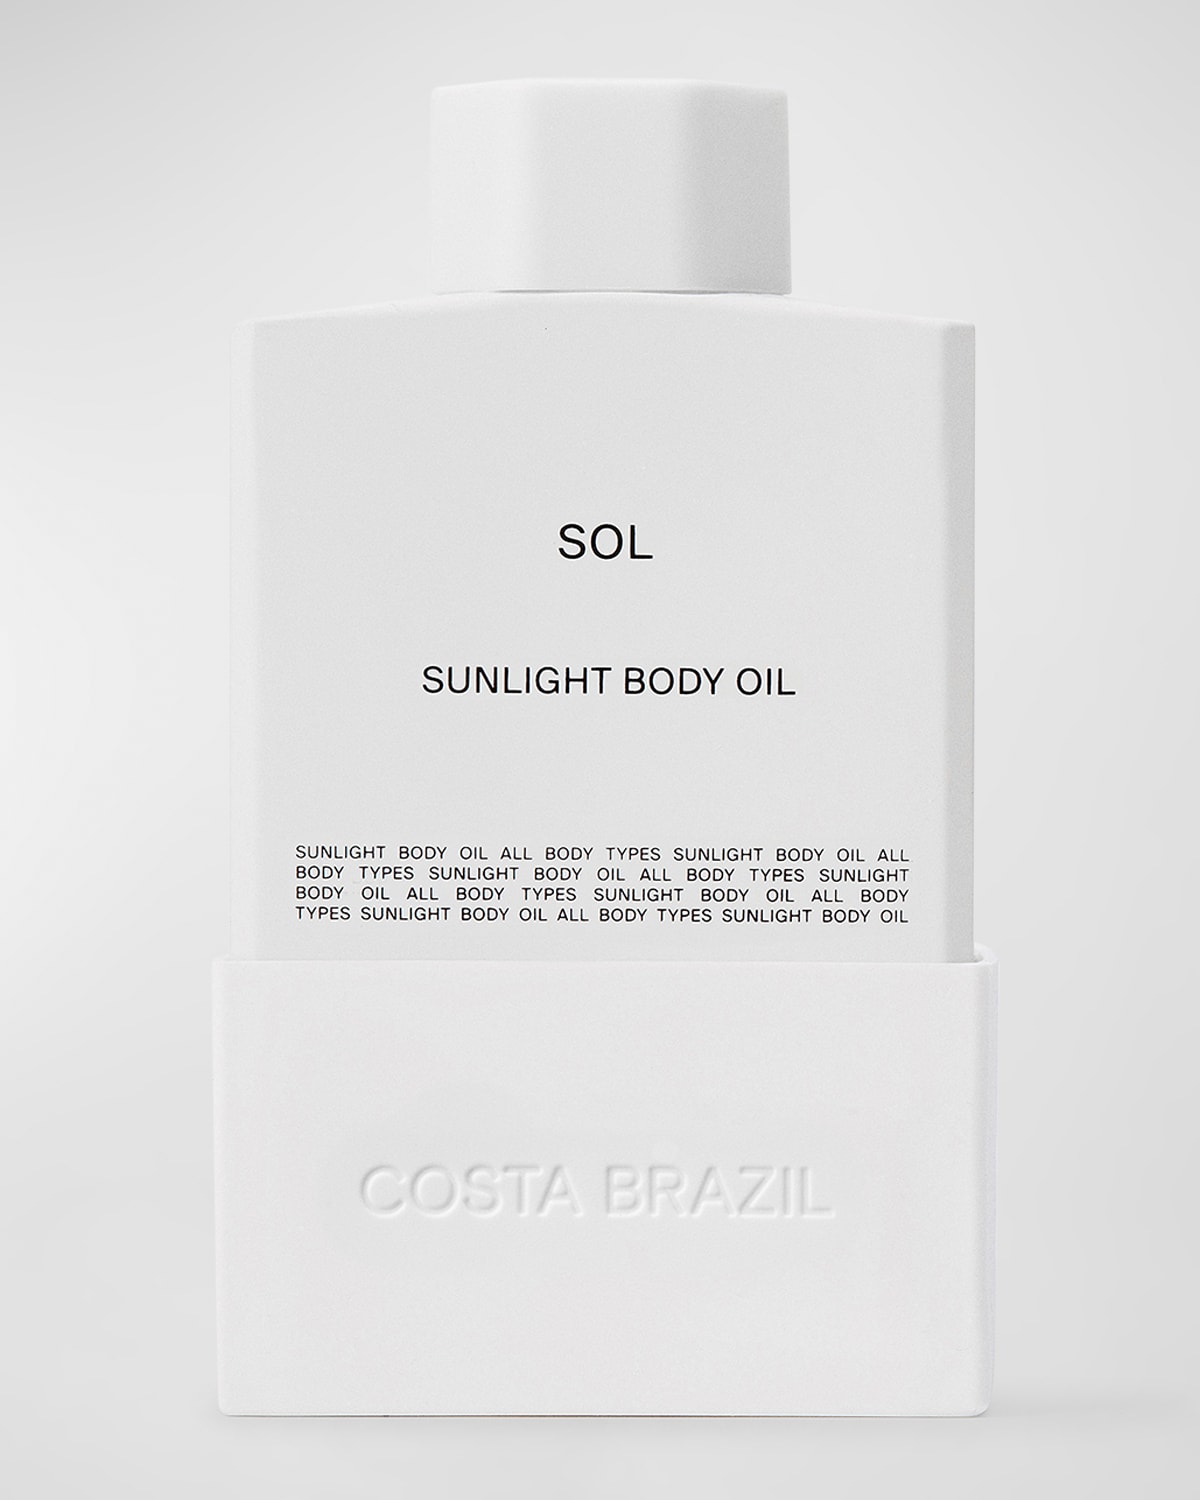 3.4 oz. Sol Sunlight Body Oil